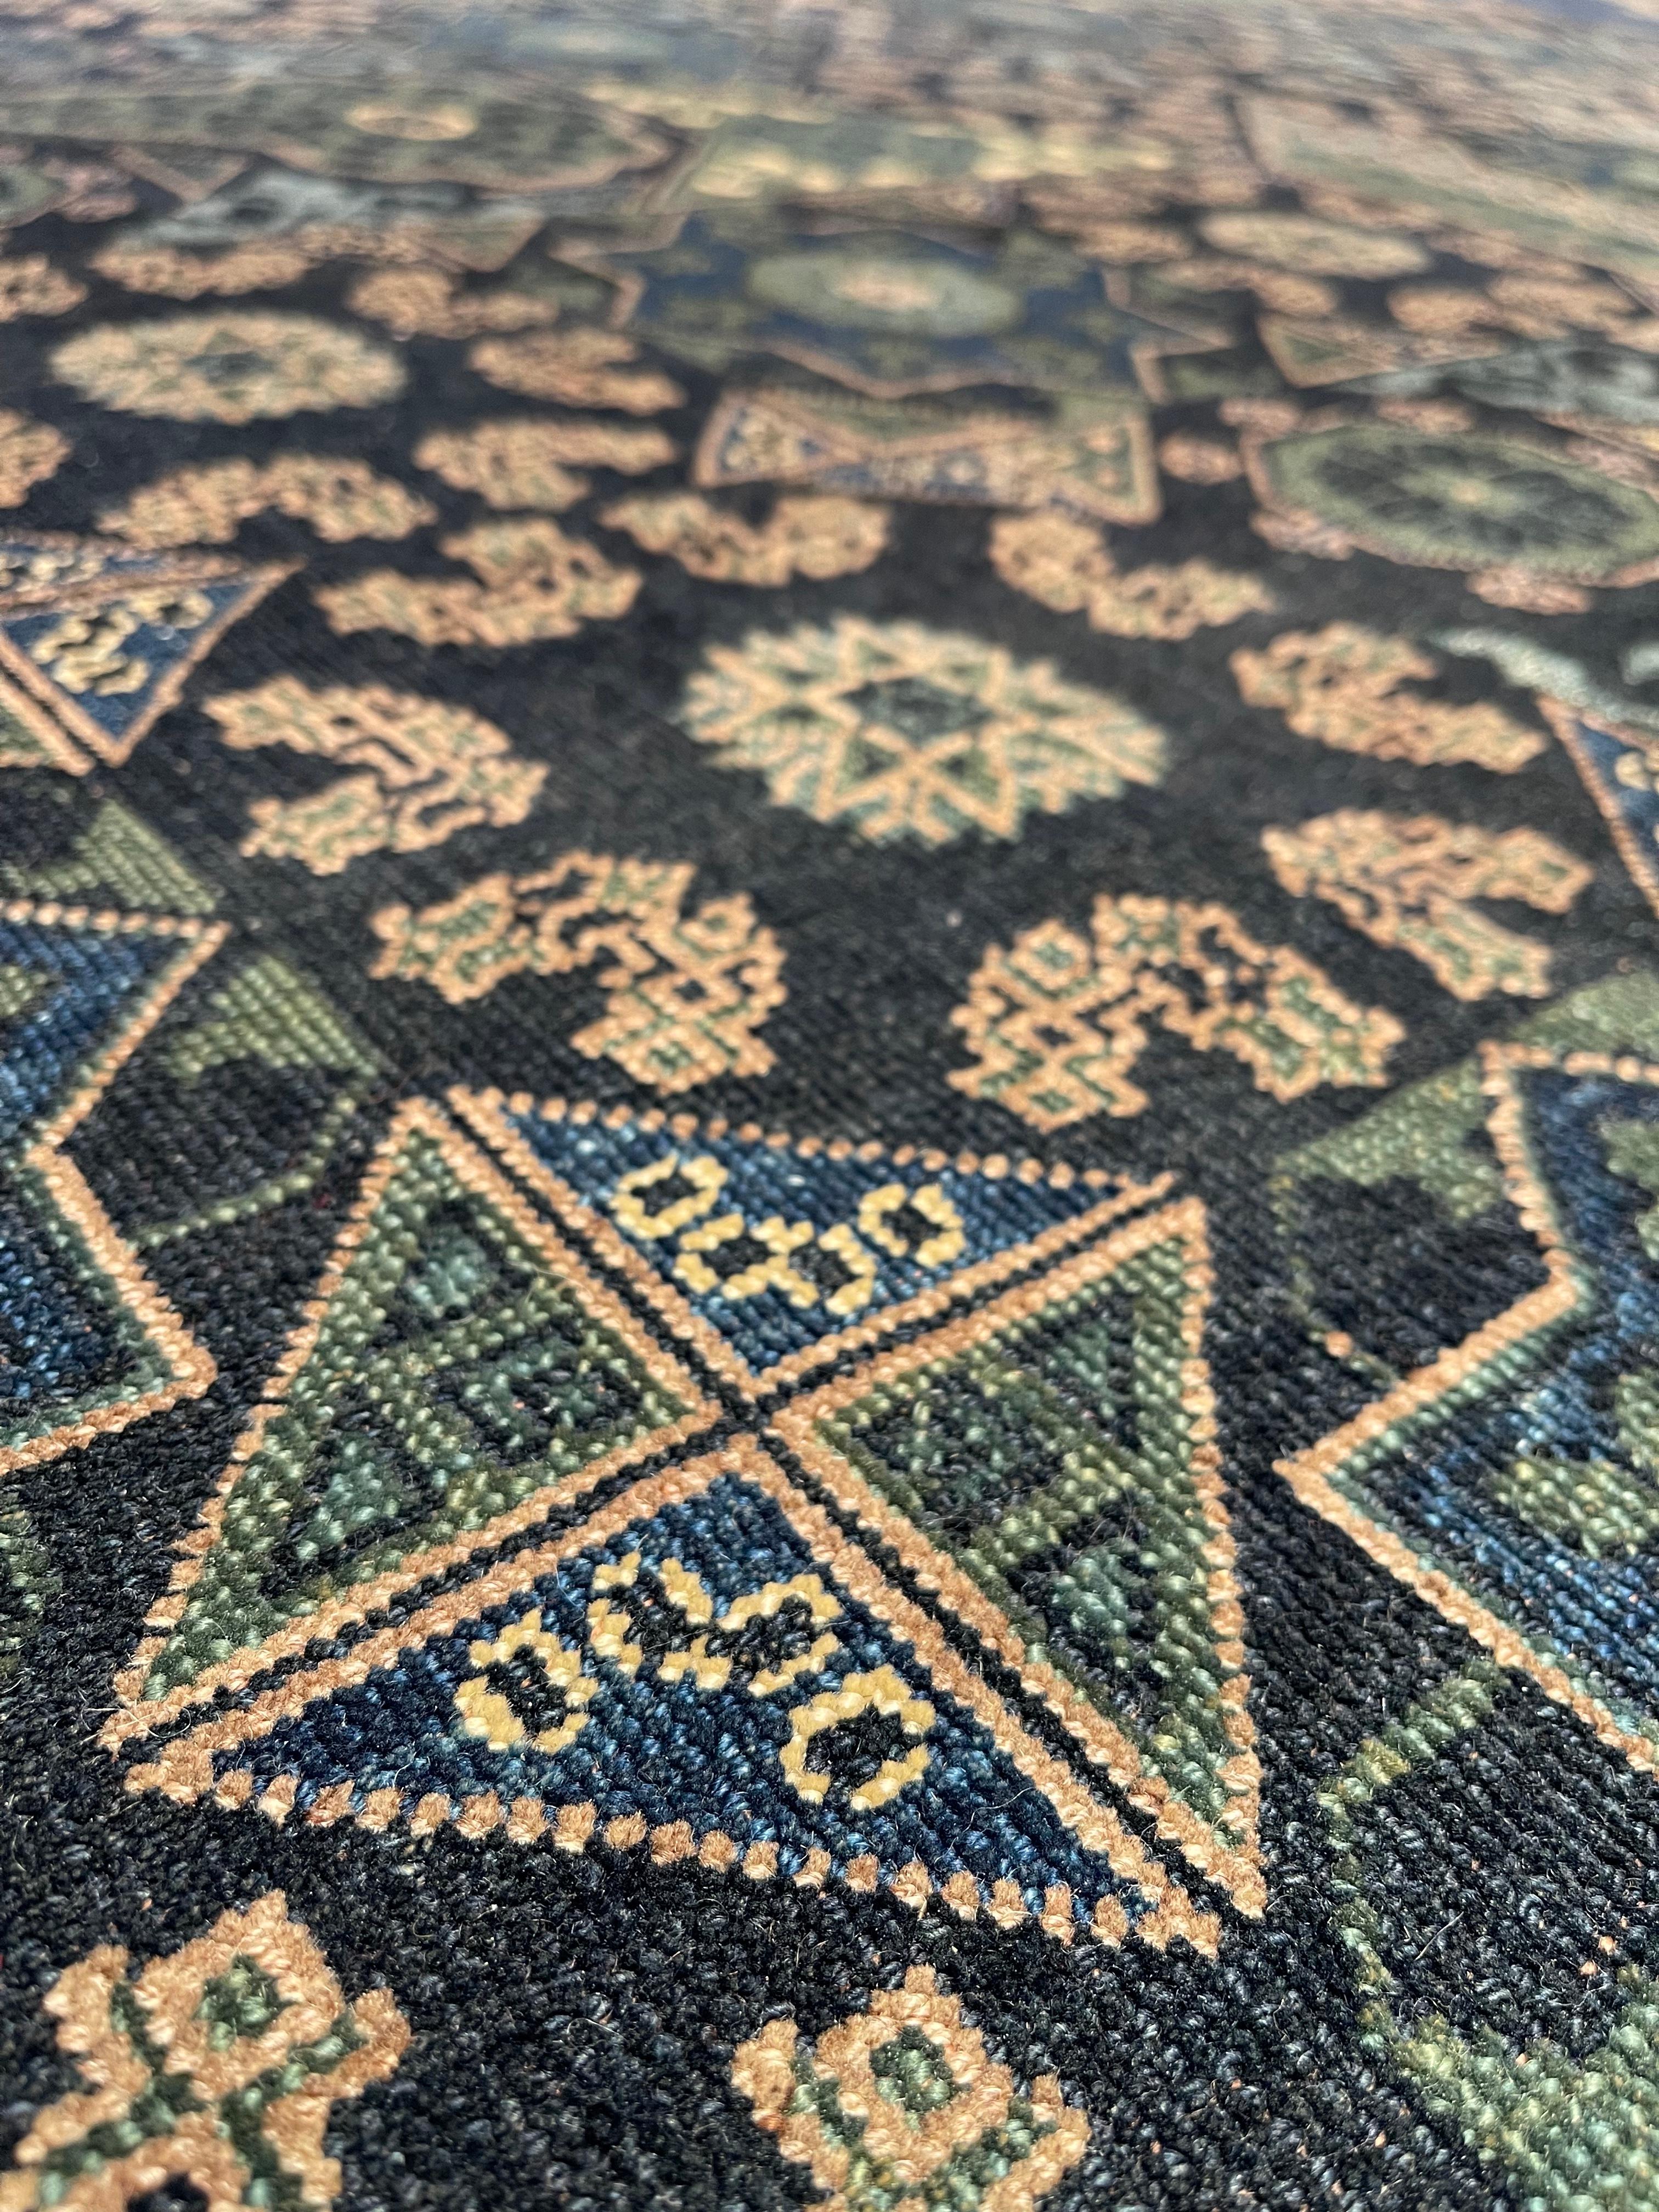 Turkish Ararat Rugs Mamluk Carpet, 16th Century Antique Revival Rug, Natural Dyed For Sale